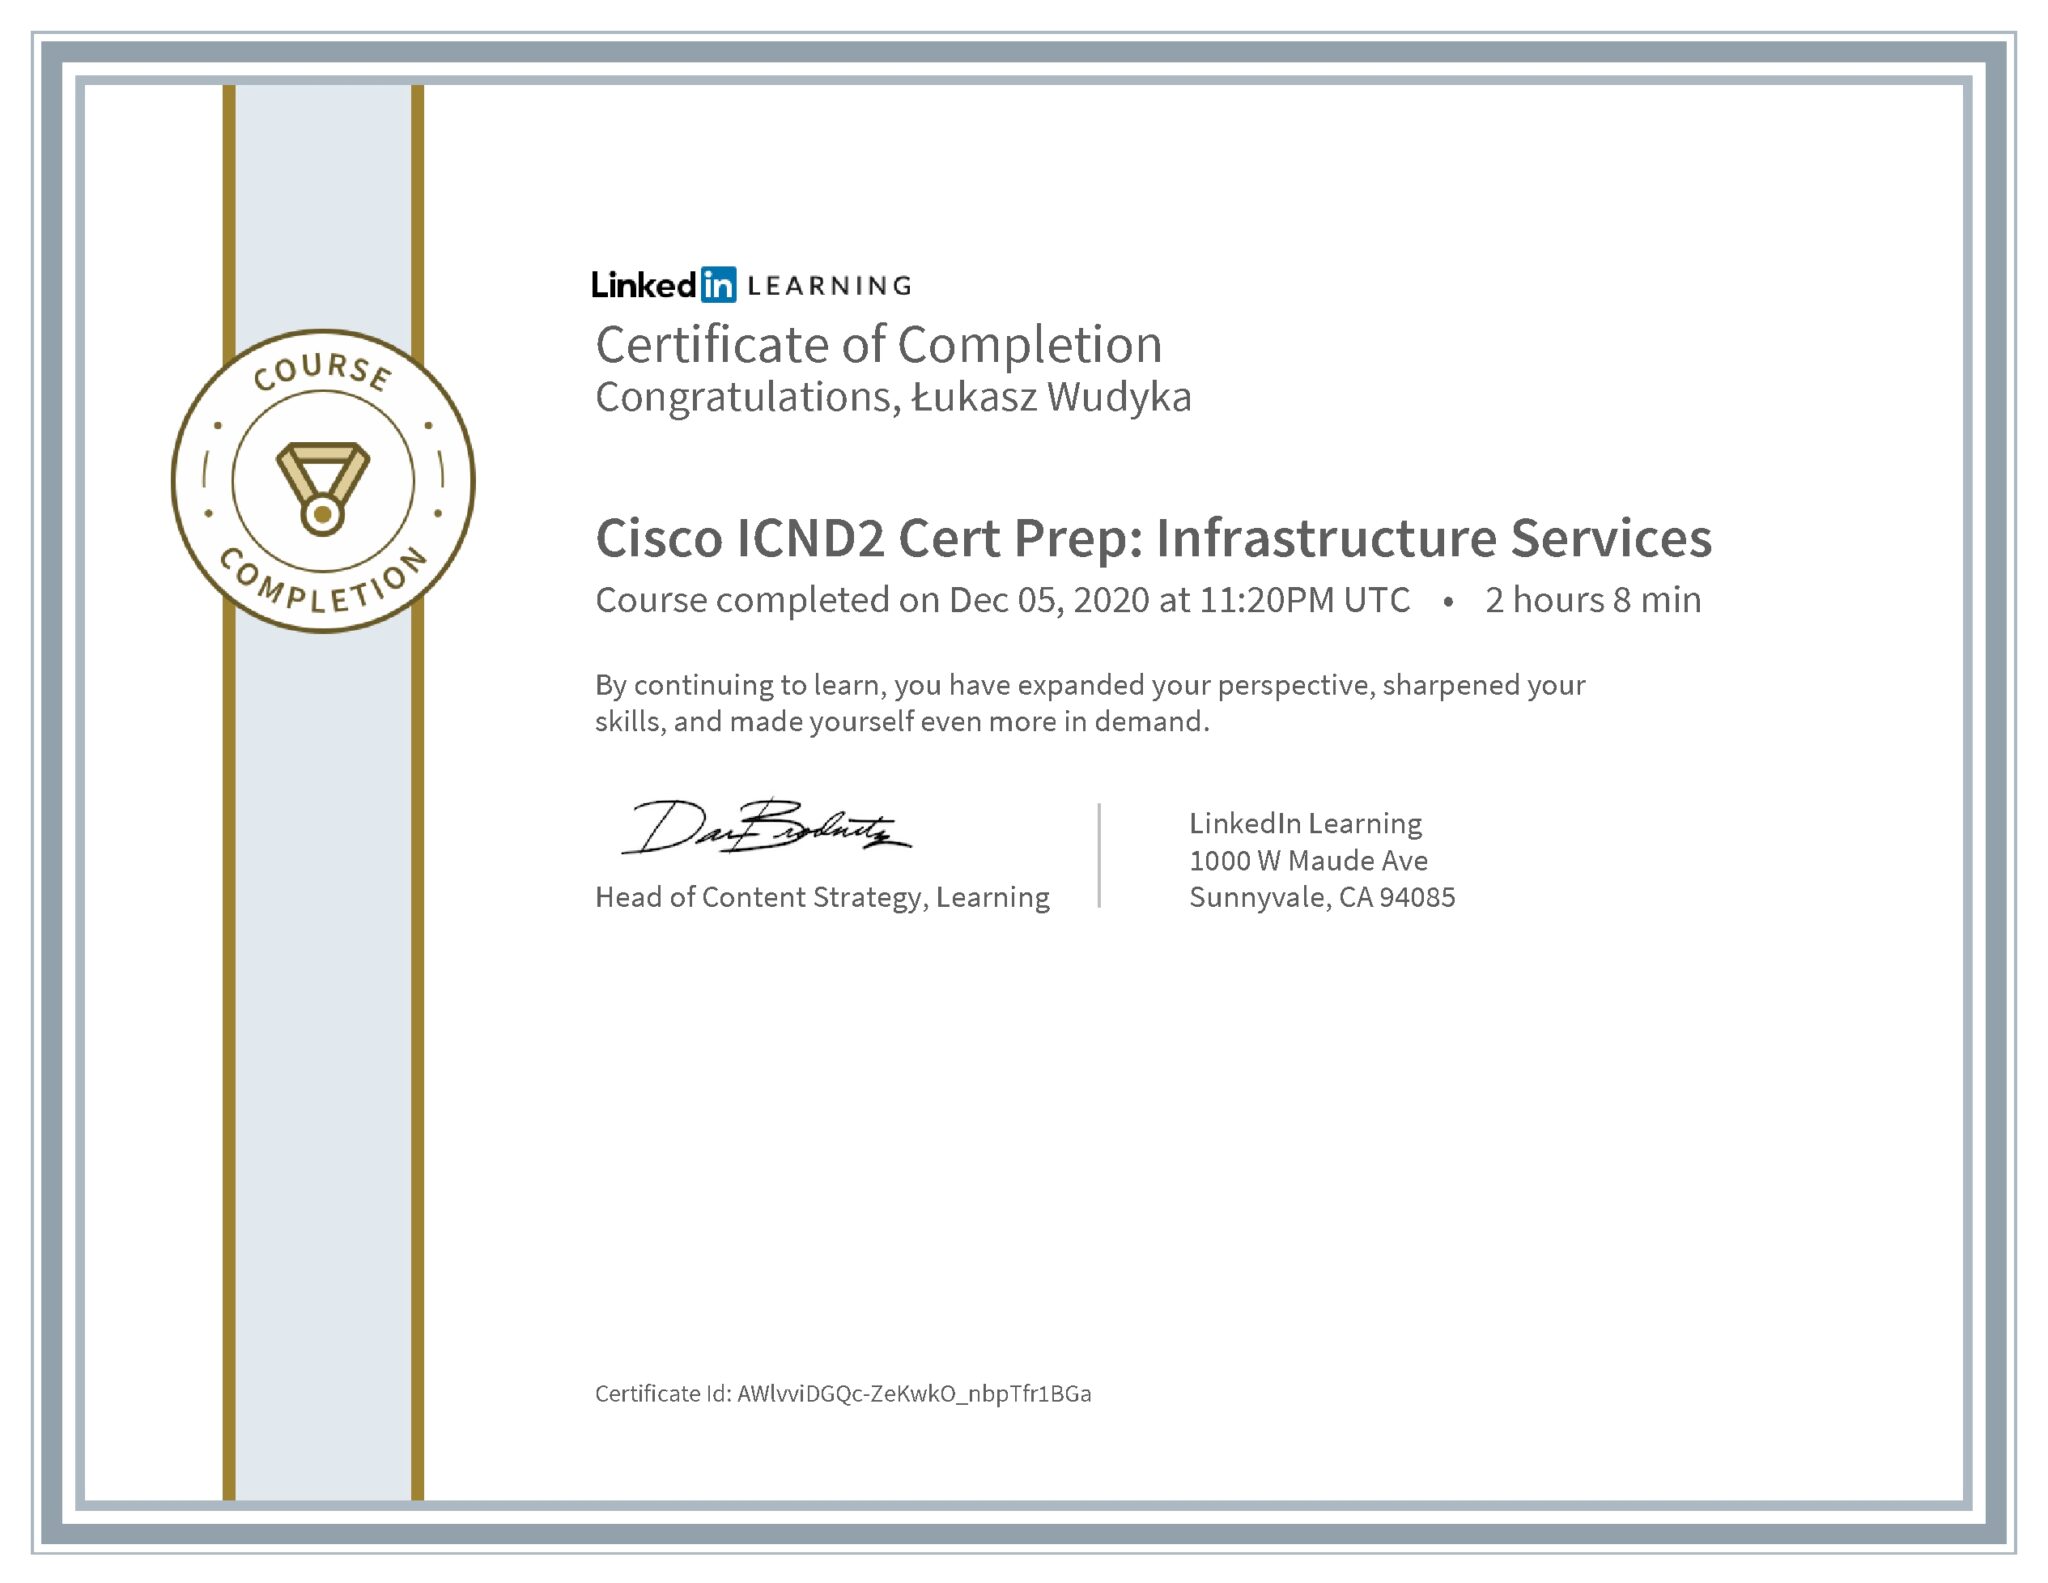 Łukasz Wudyka certyfikat LinkedIn Cisco ICND2 Cert Prep: Infrastructure Services